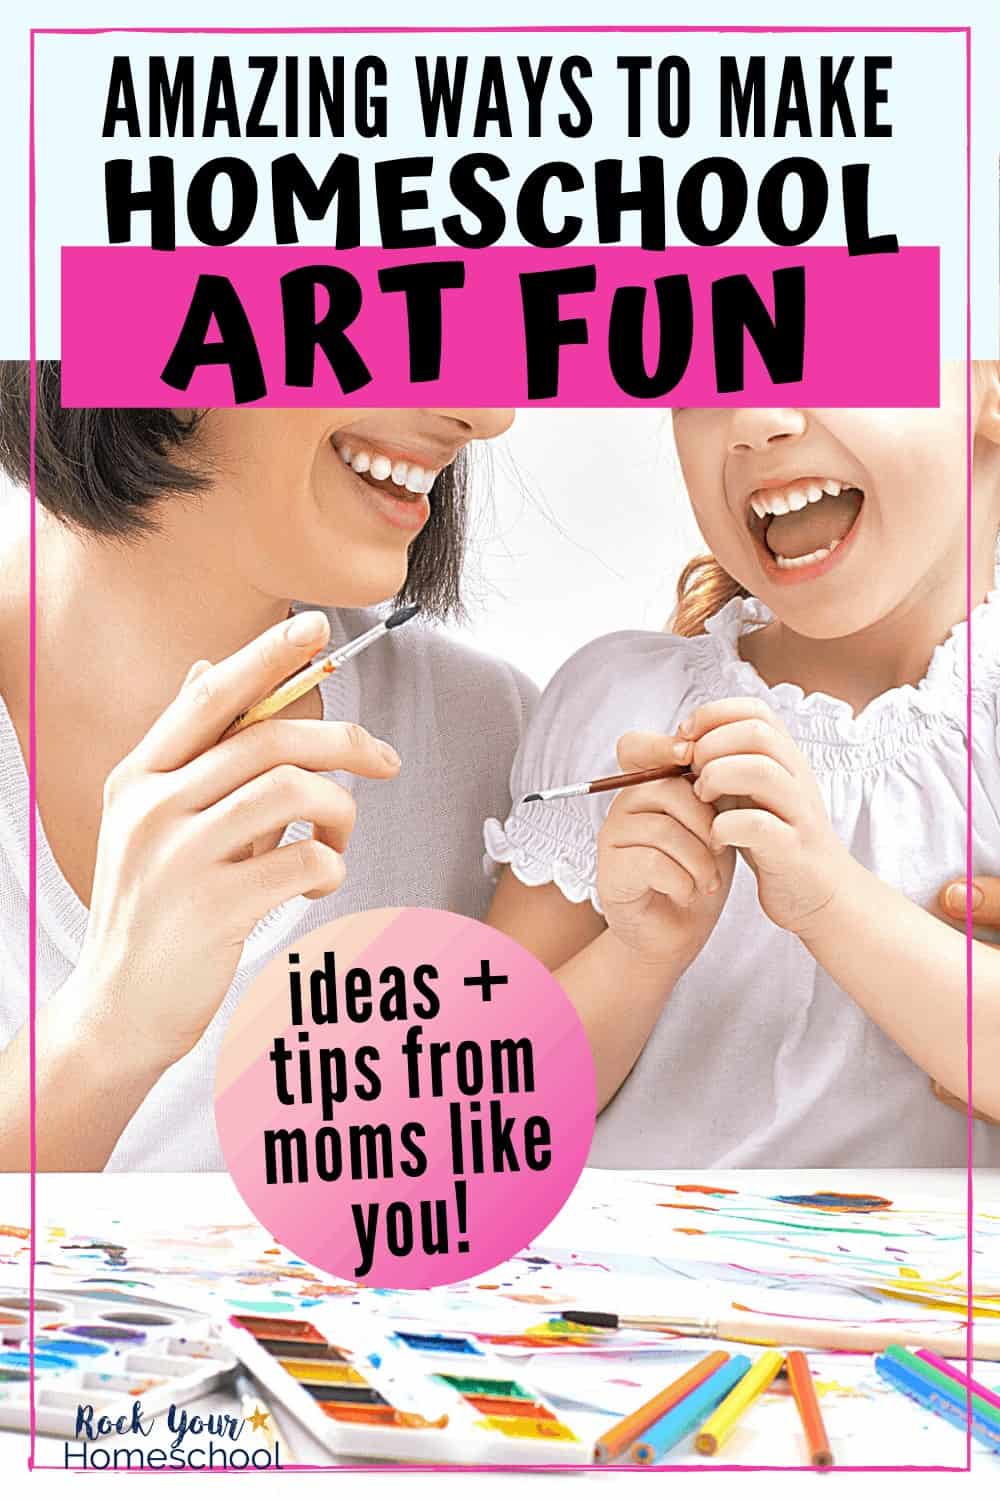 Amazing Ways to Make Homeschool Art Fun